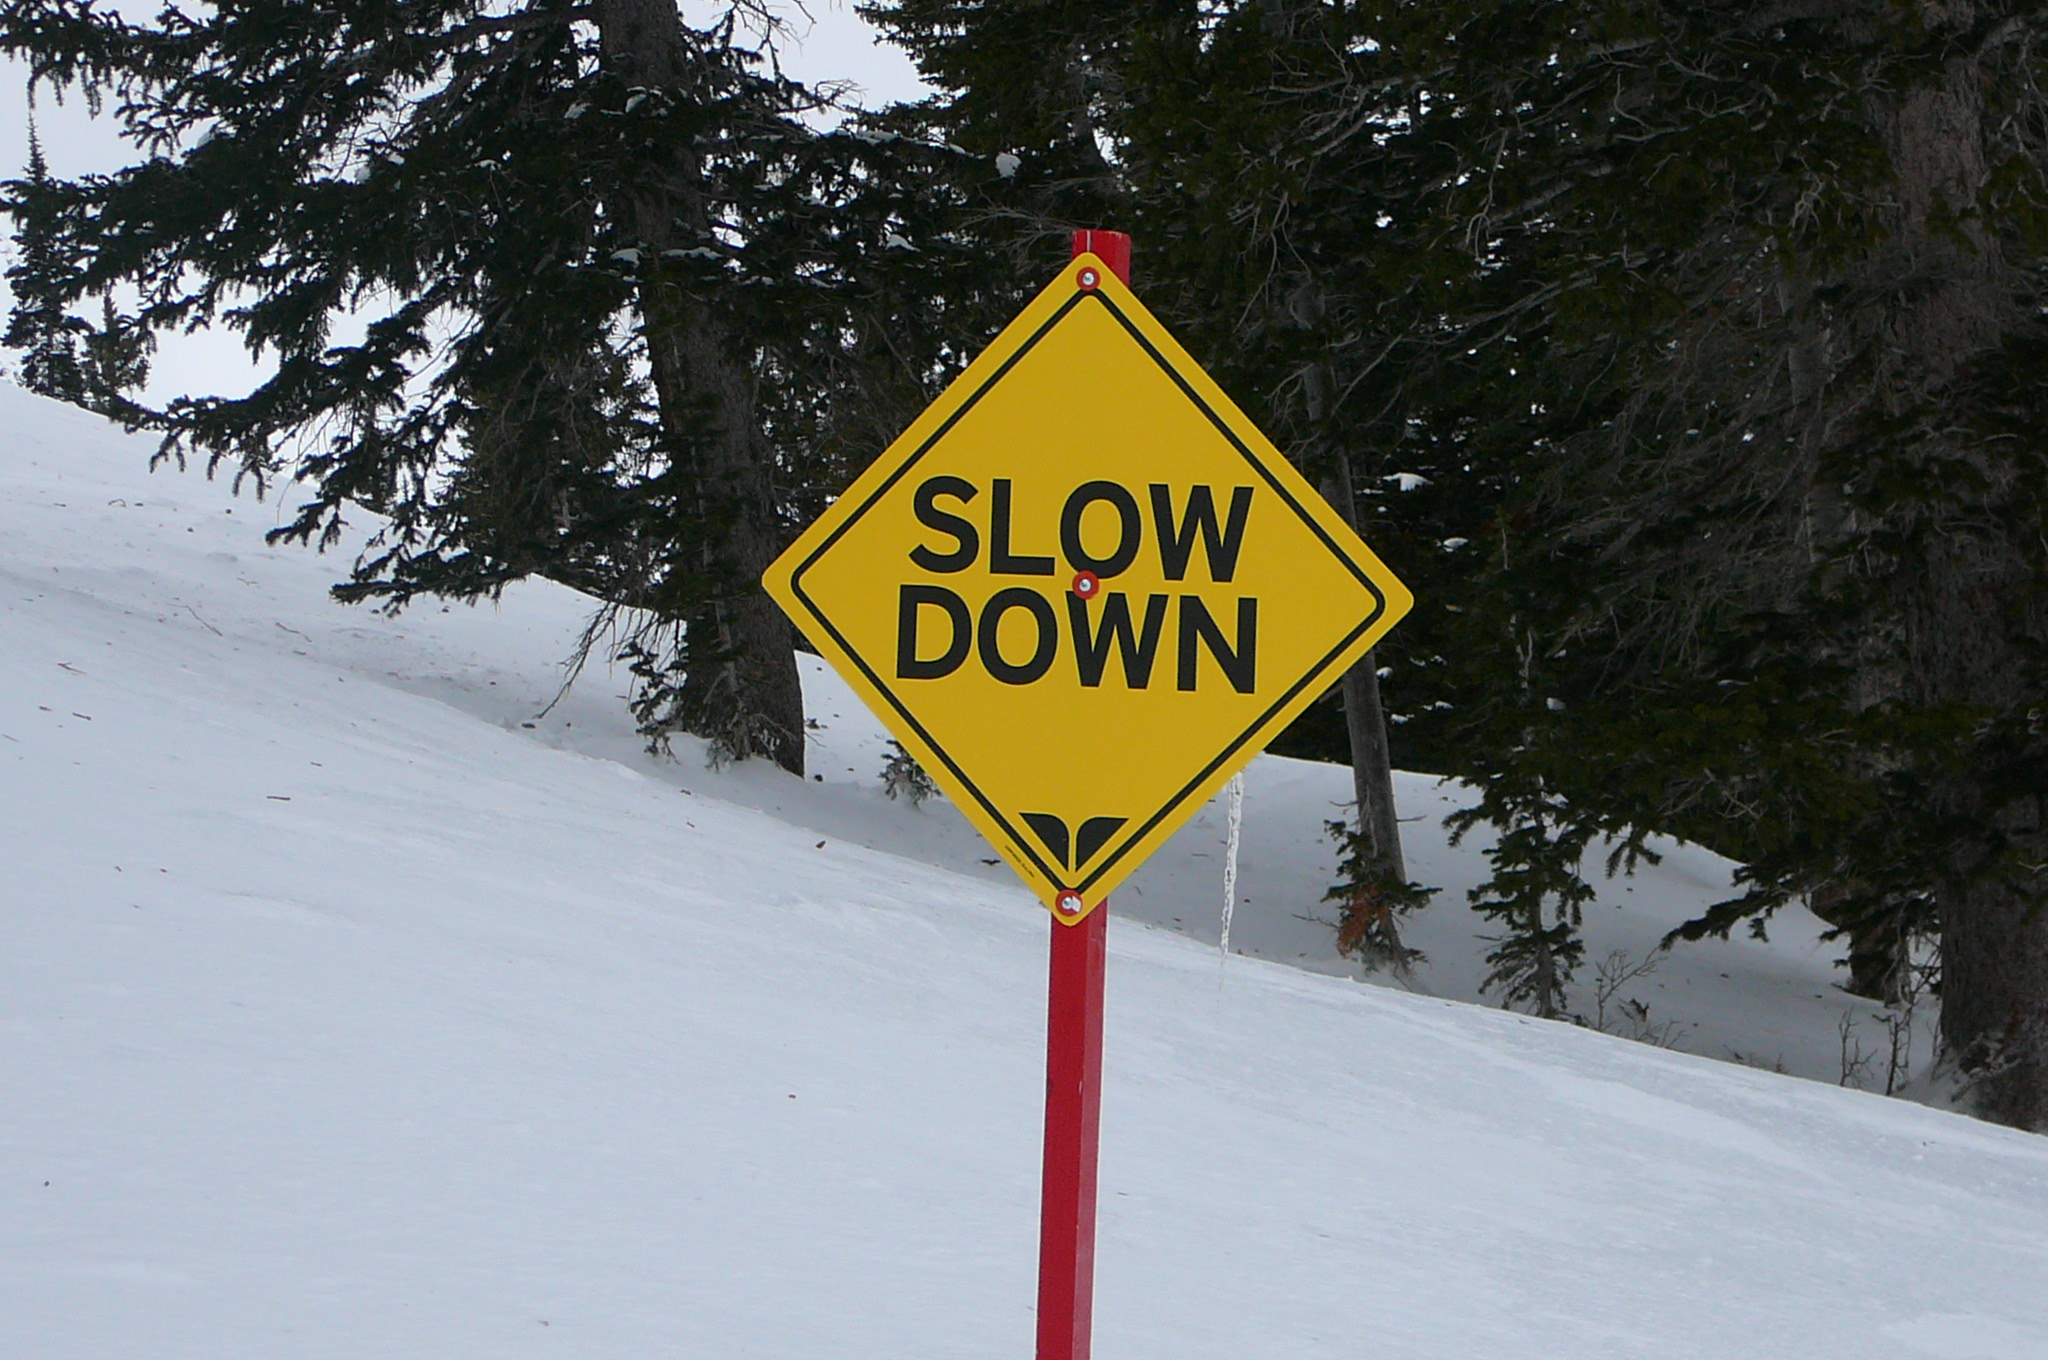 Instructional Ski Trail Sign